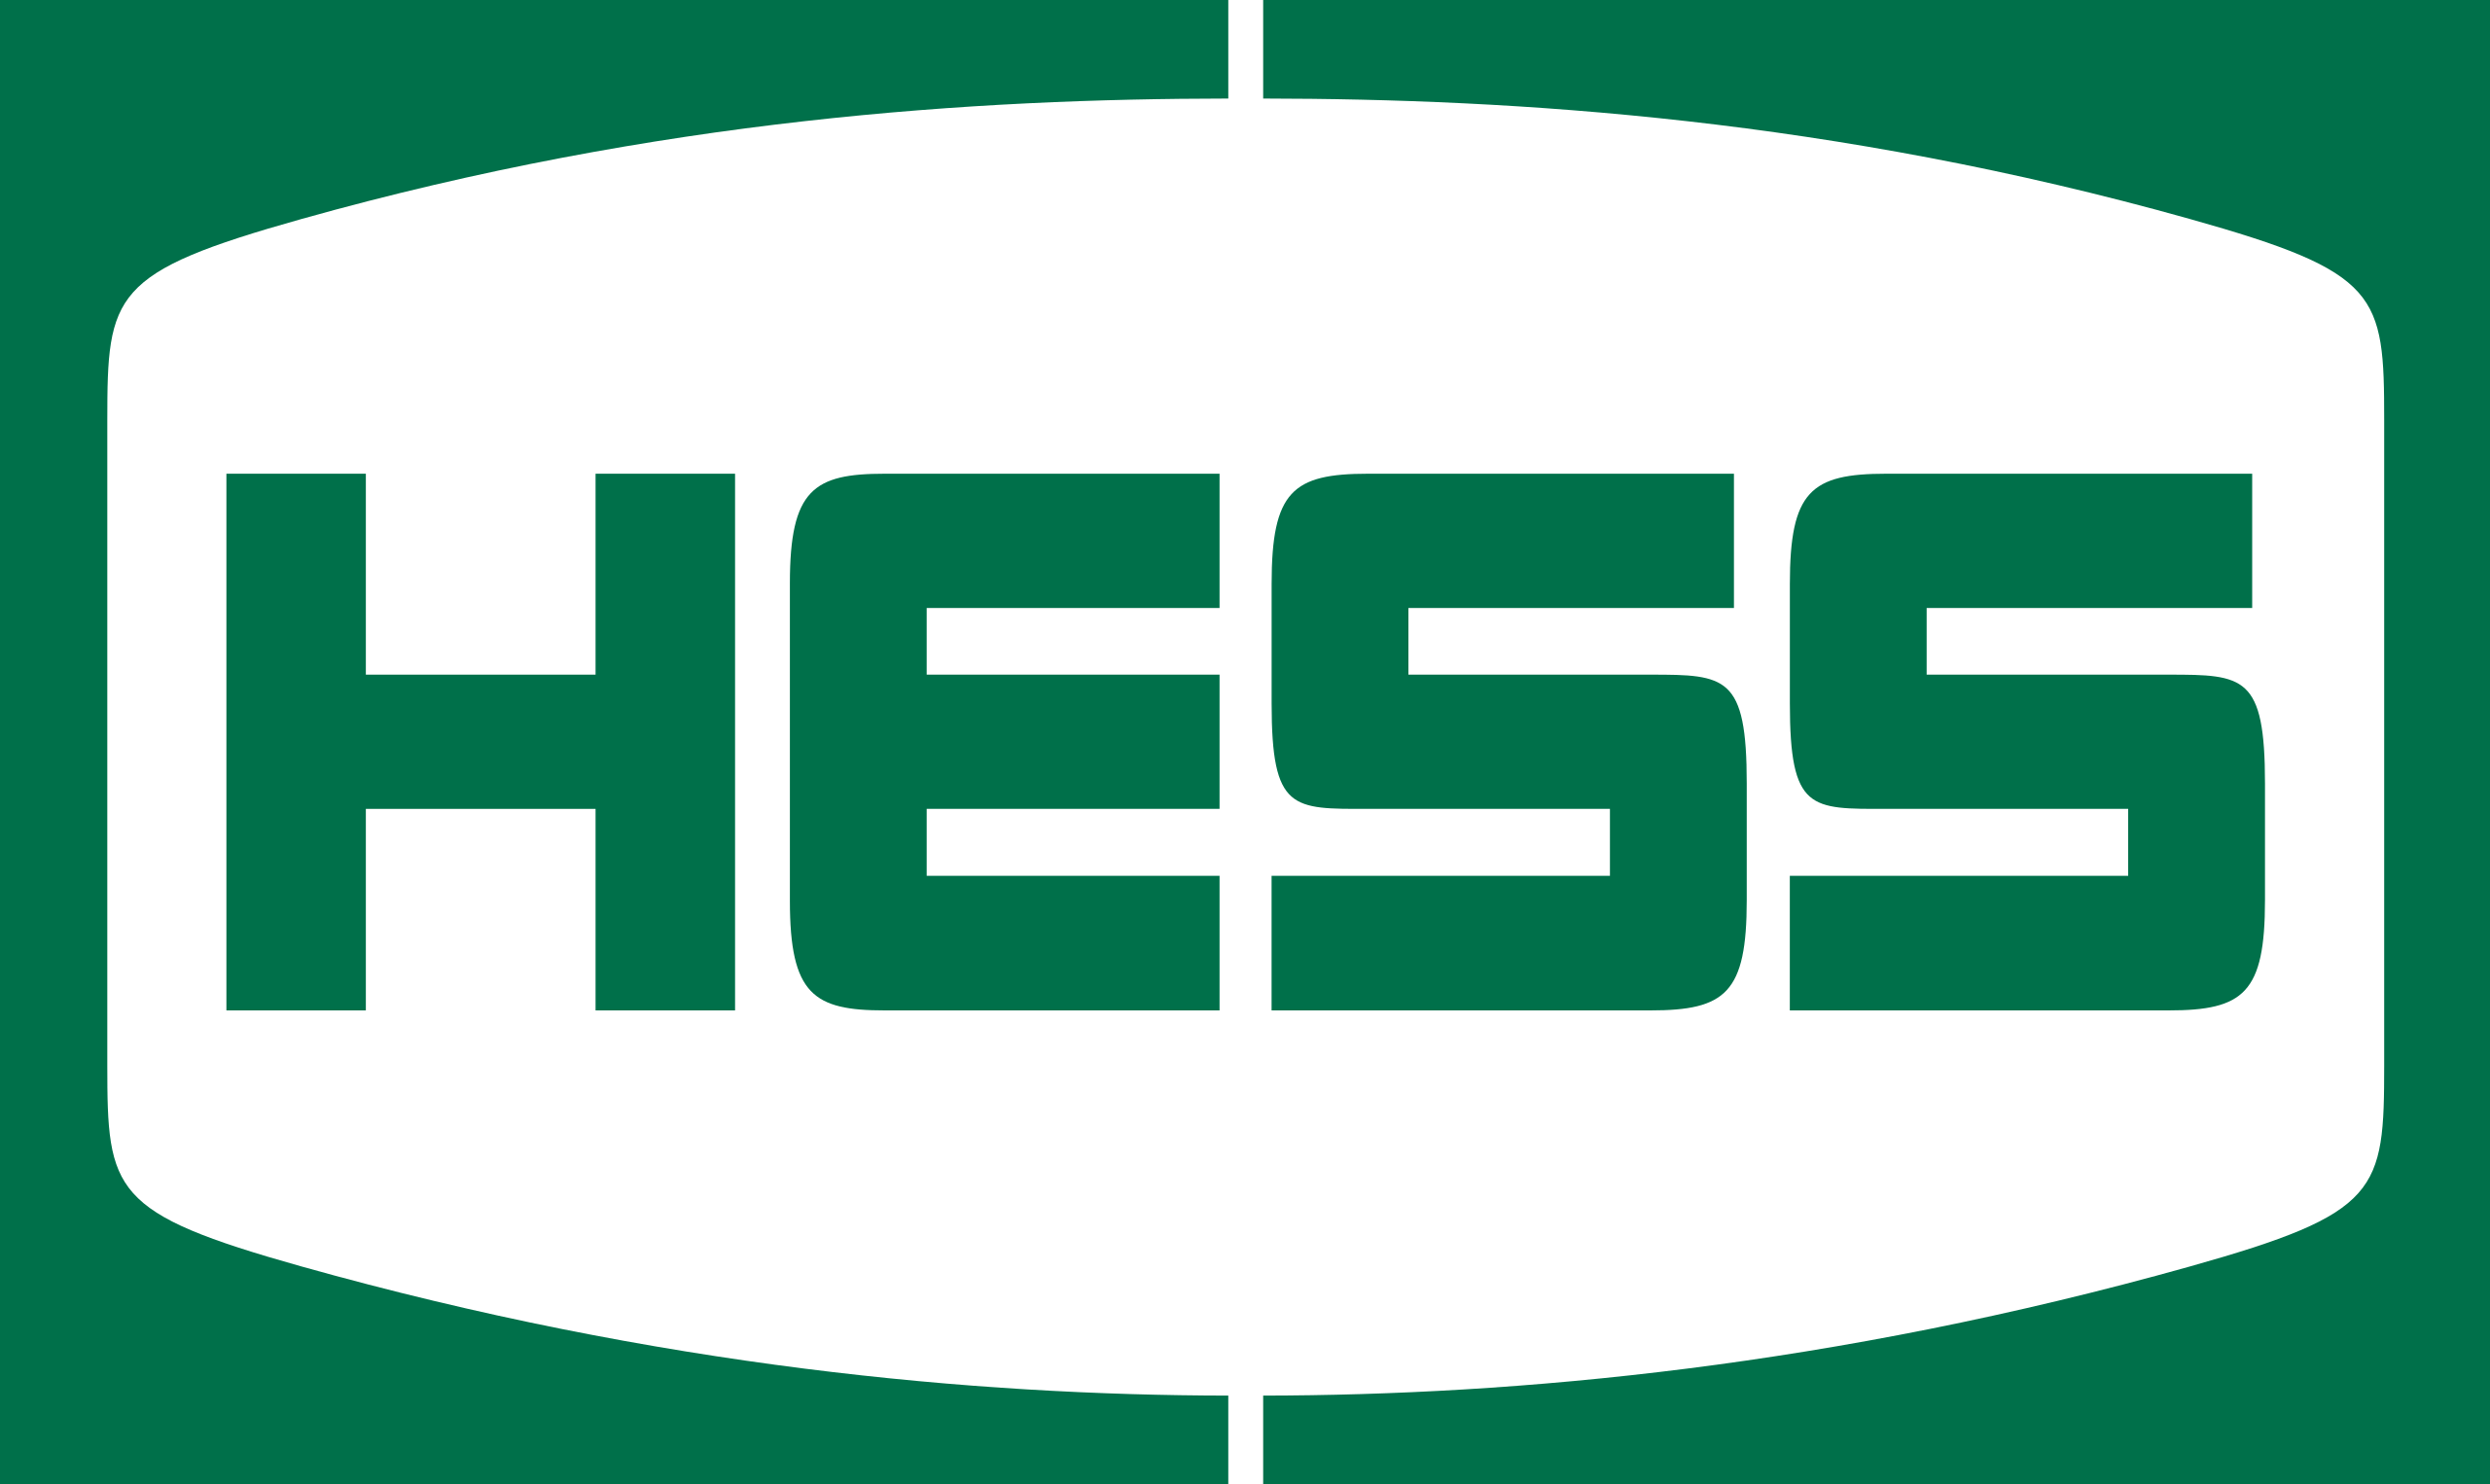 Hess Corporation